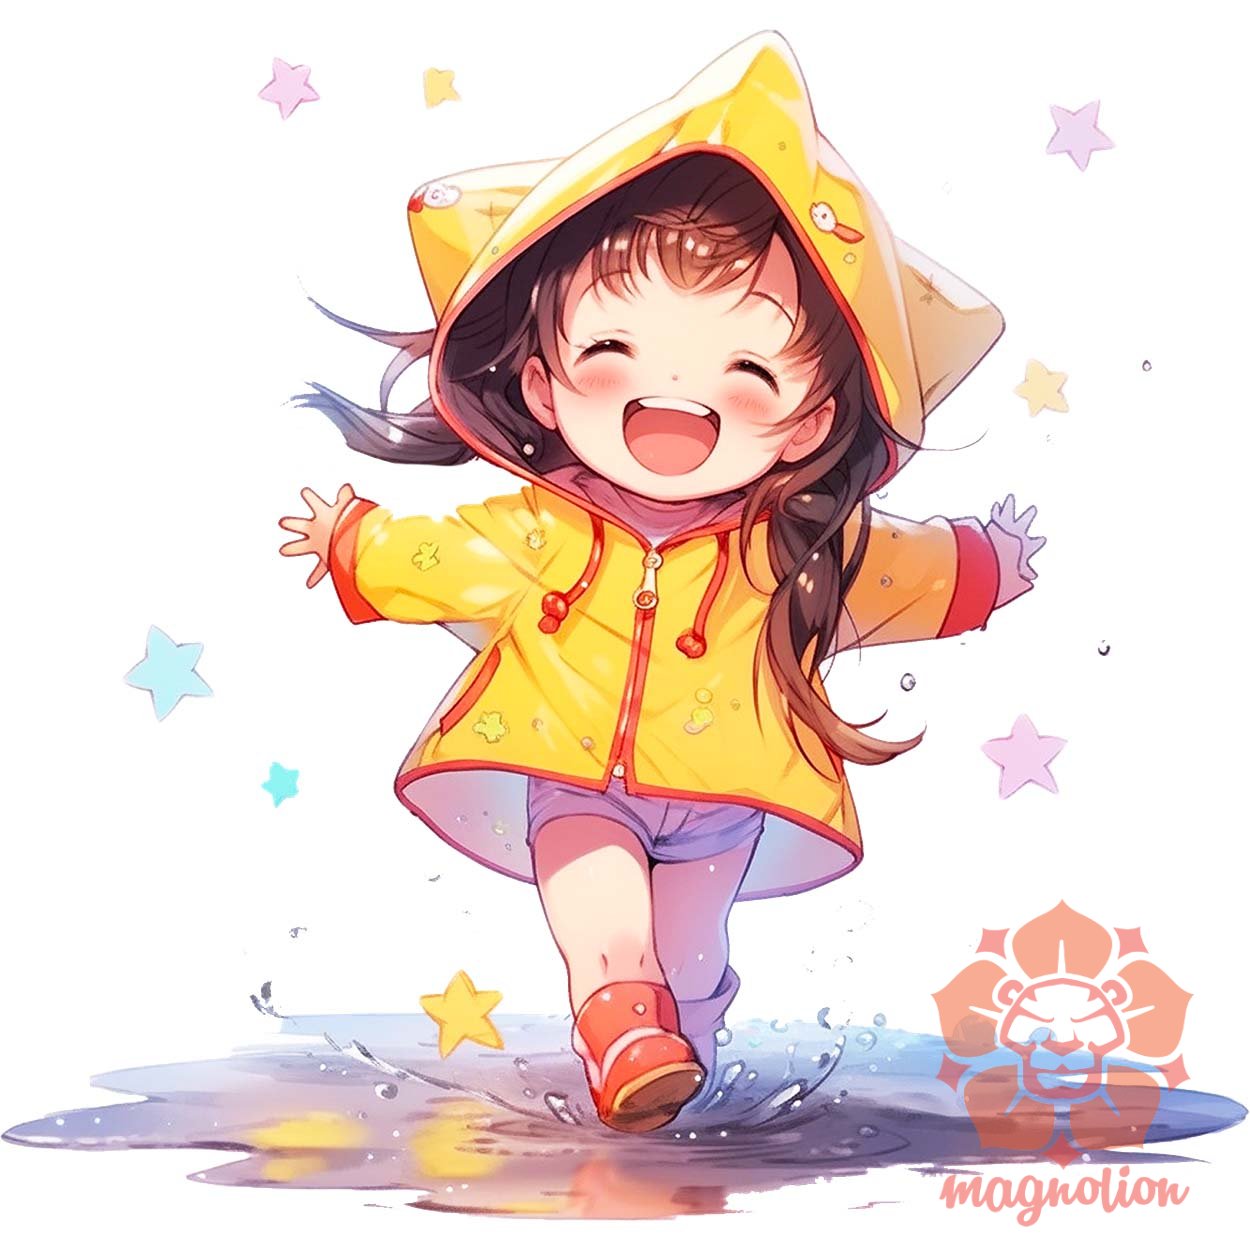 Chibi lány esőben táncol v3